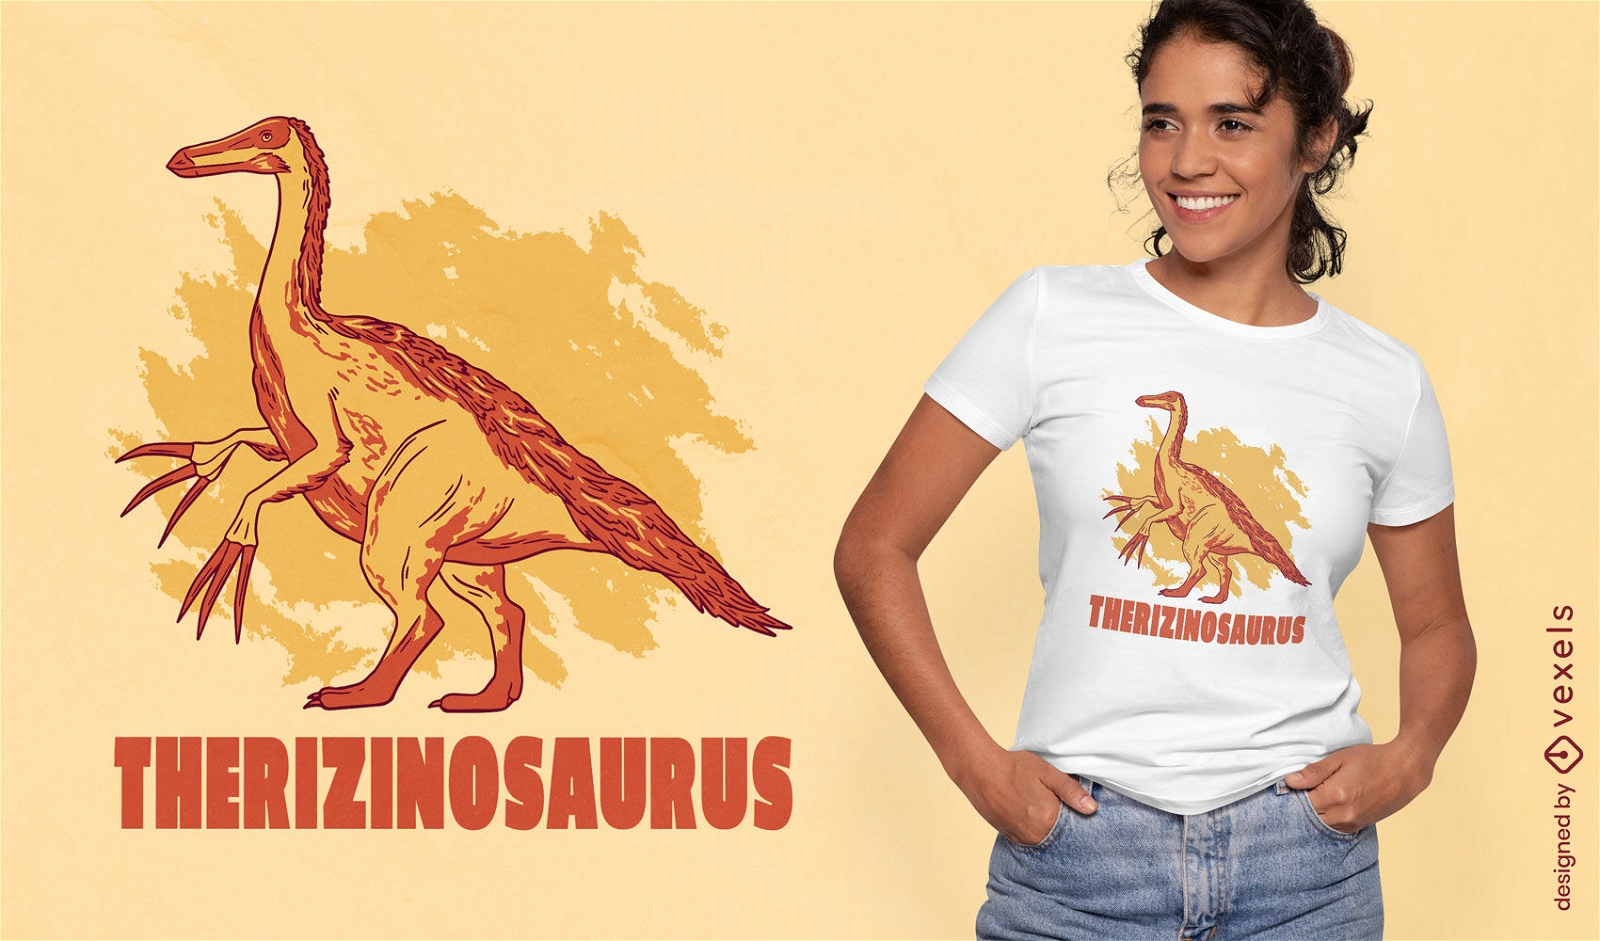 Therizinosaurus dinosaur t-shirt design